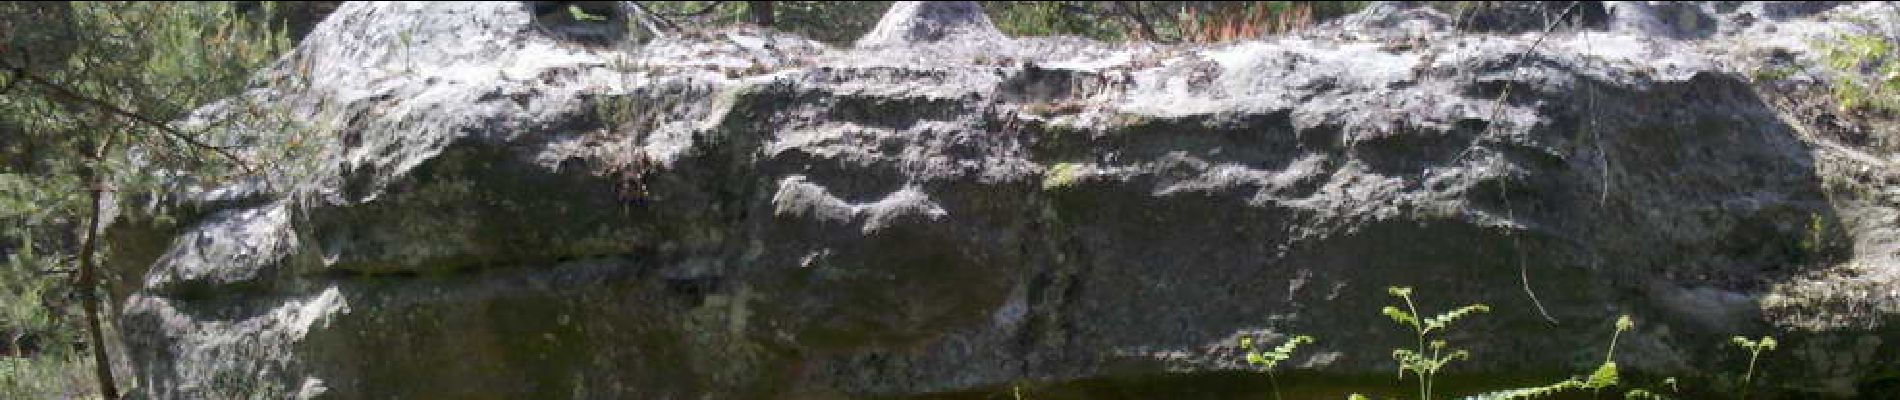 POI Fontainebleau - 11 - Le museau d'un <i>Sarcosuchus imperator</i> - Photo